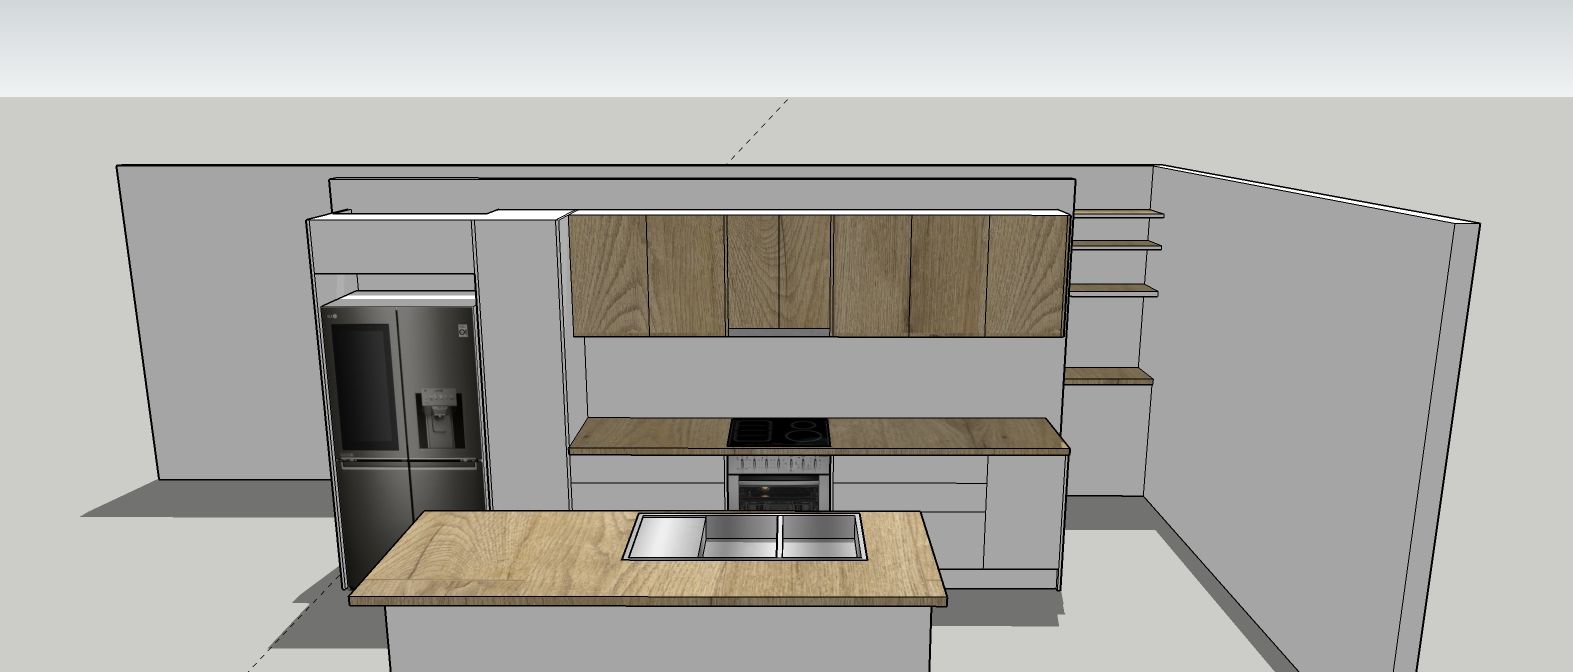 New kitchen build | Bunnings Workshop community